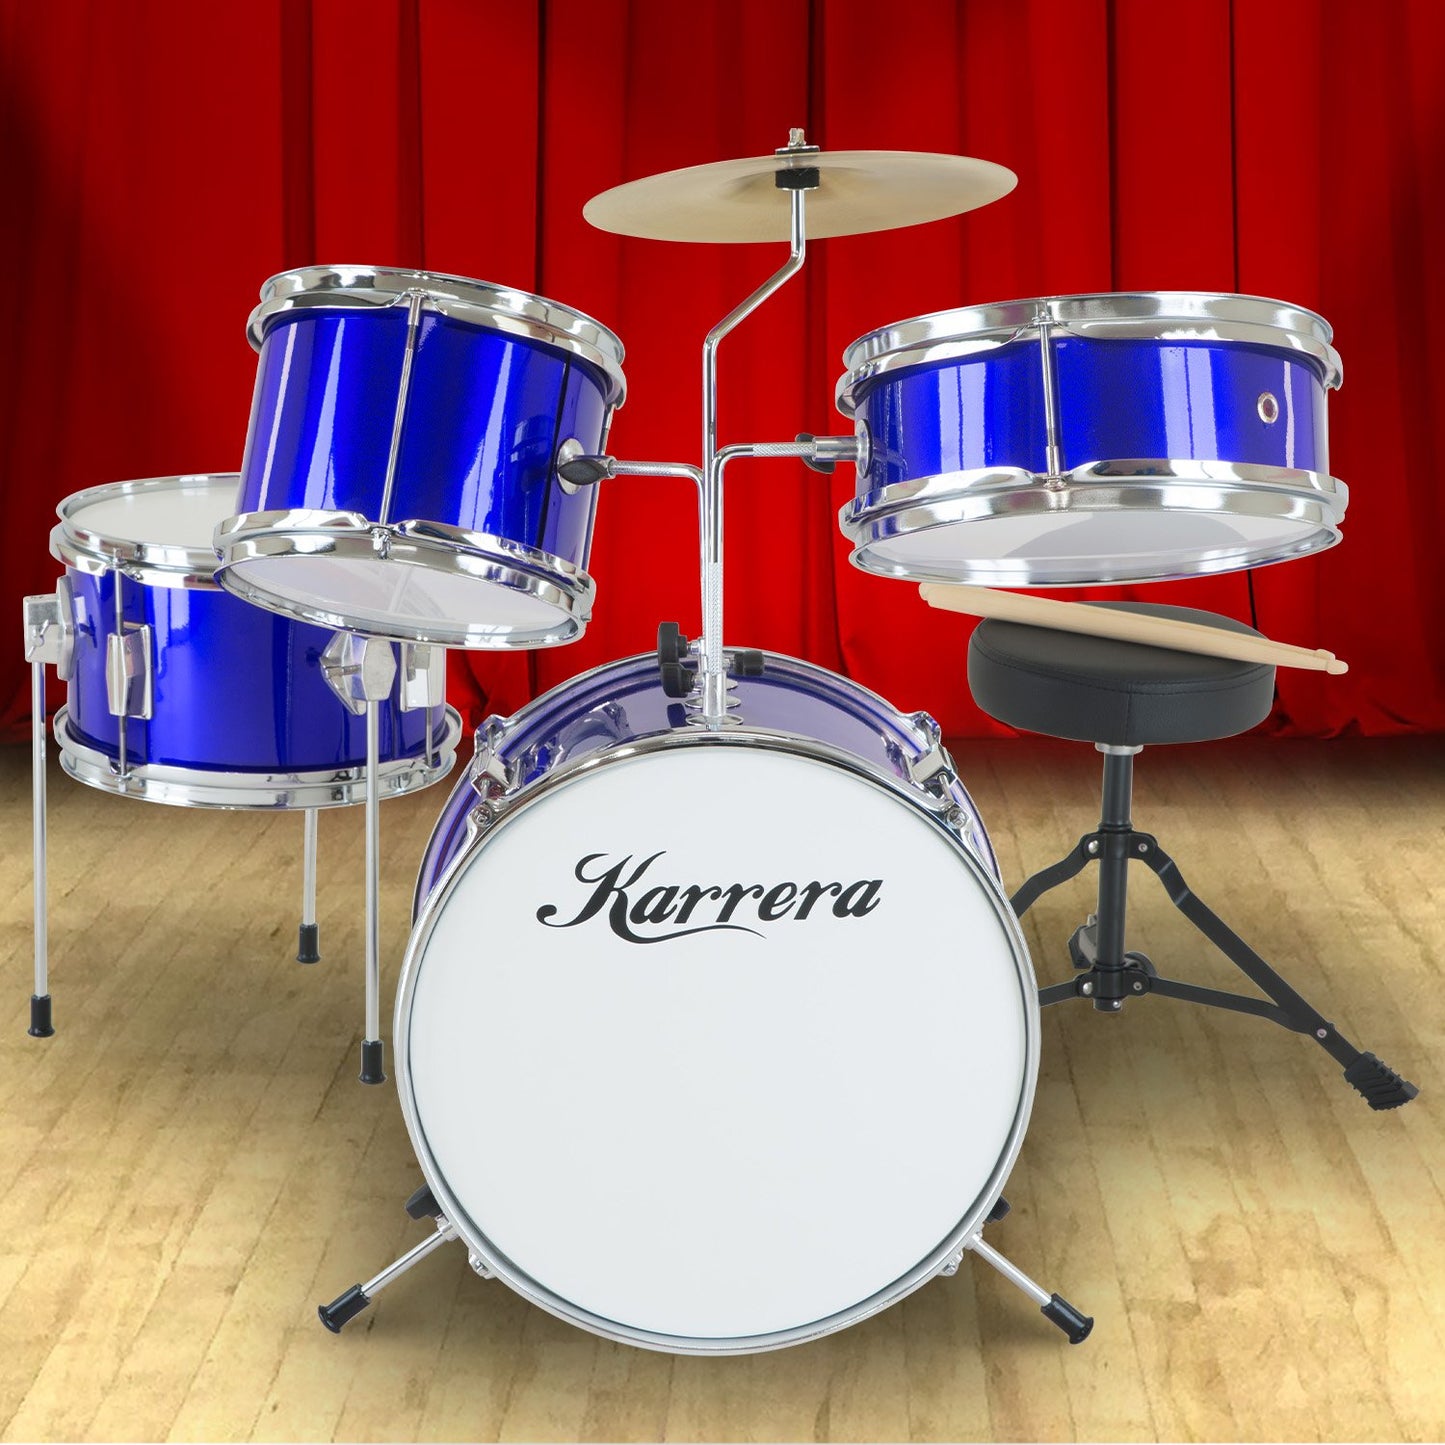 Karrera Children's 4pc Drum Kit - Blue